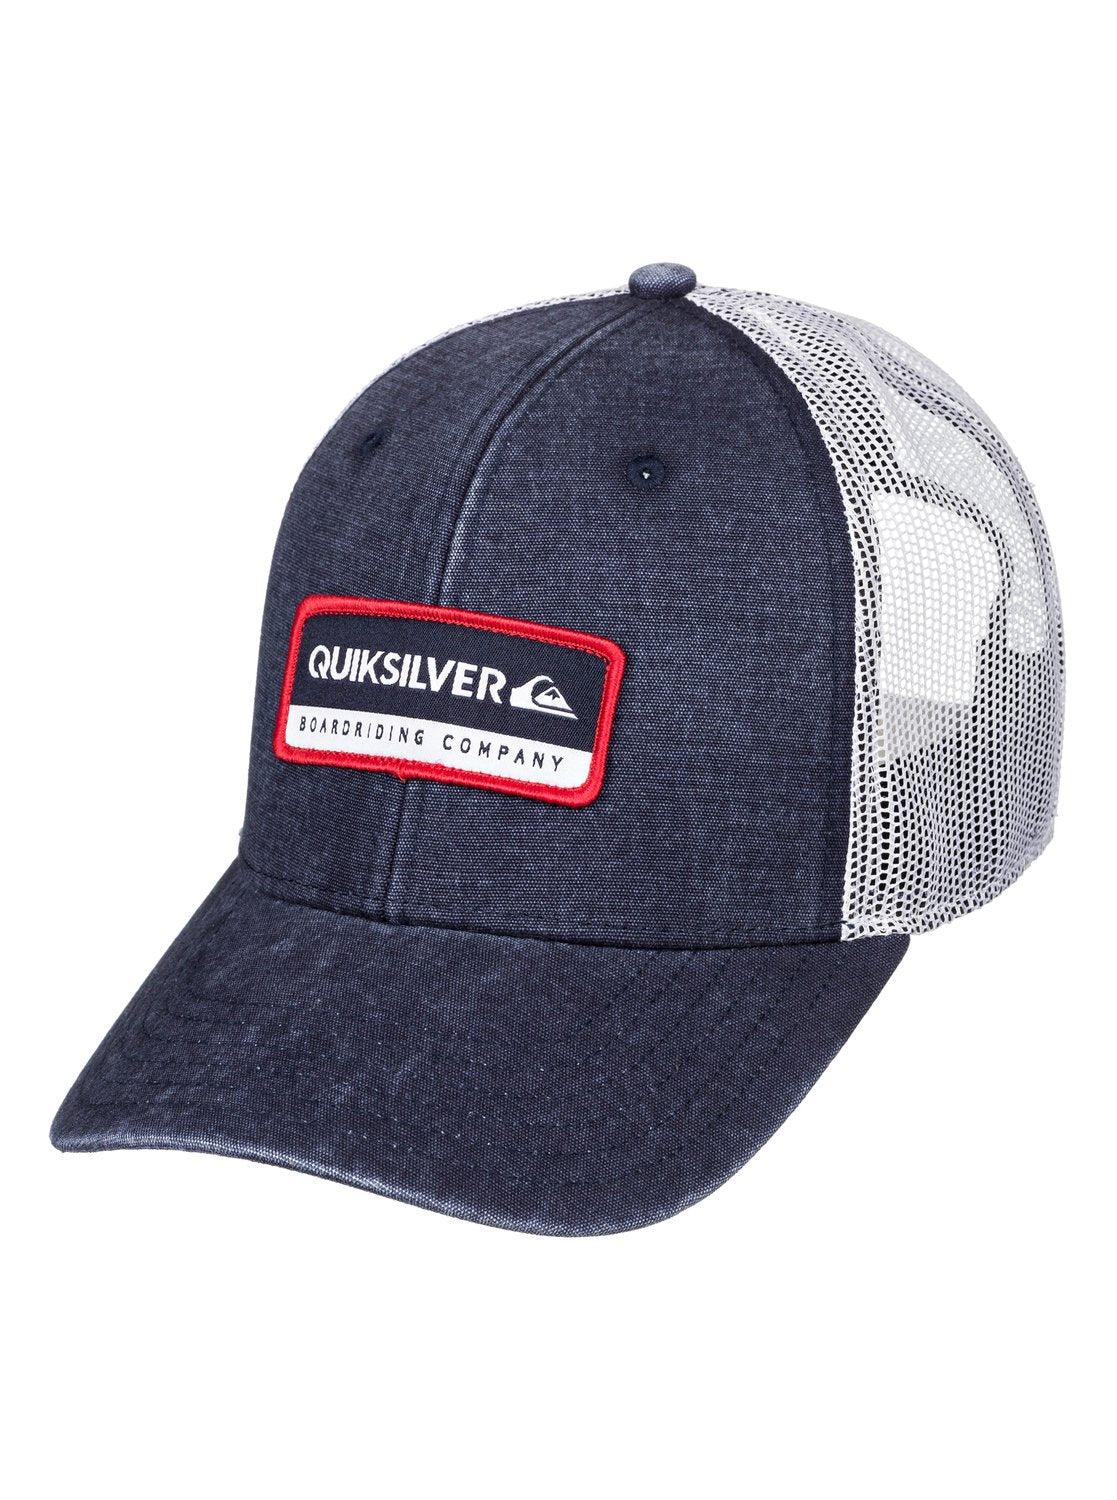 Quiksilver Rinsed Trucker Hat BYK0 OS